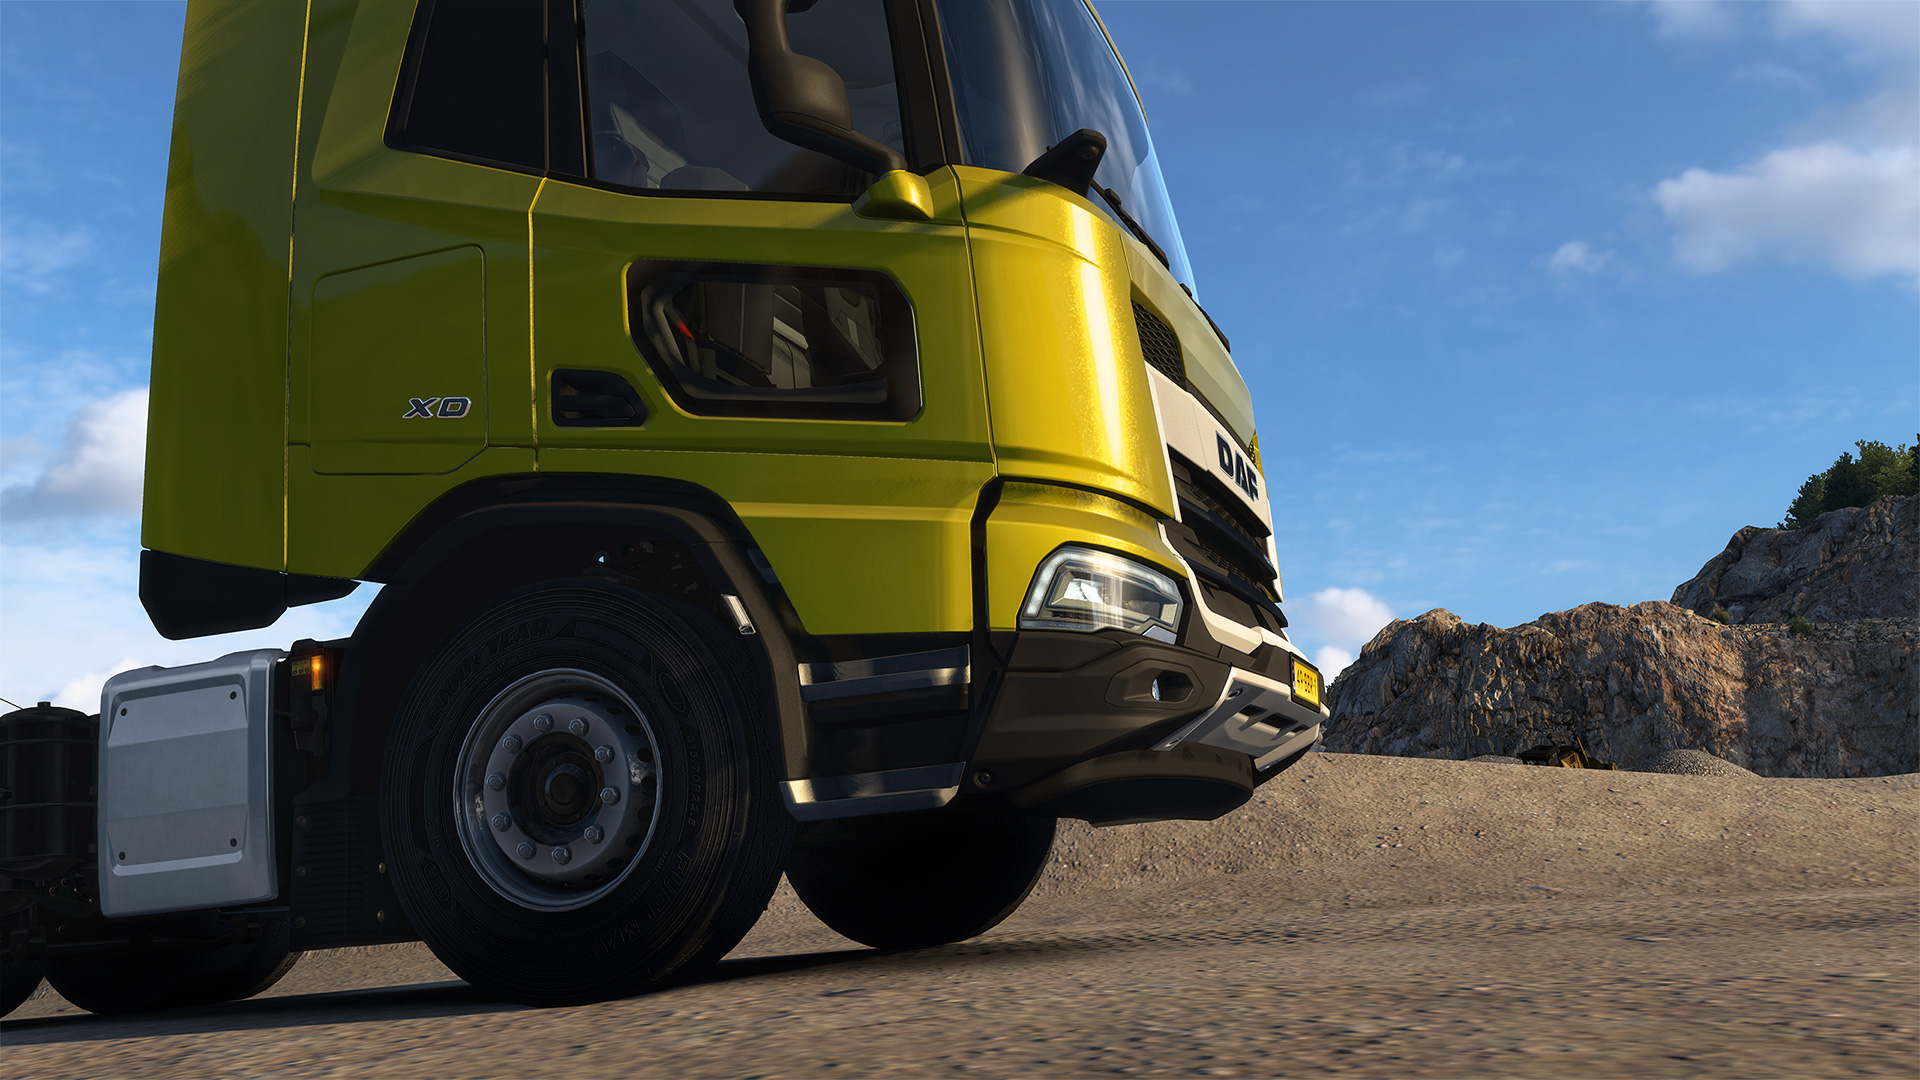 DAF XD Release news - Euro Truck Simulator 2 - IndieDB